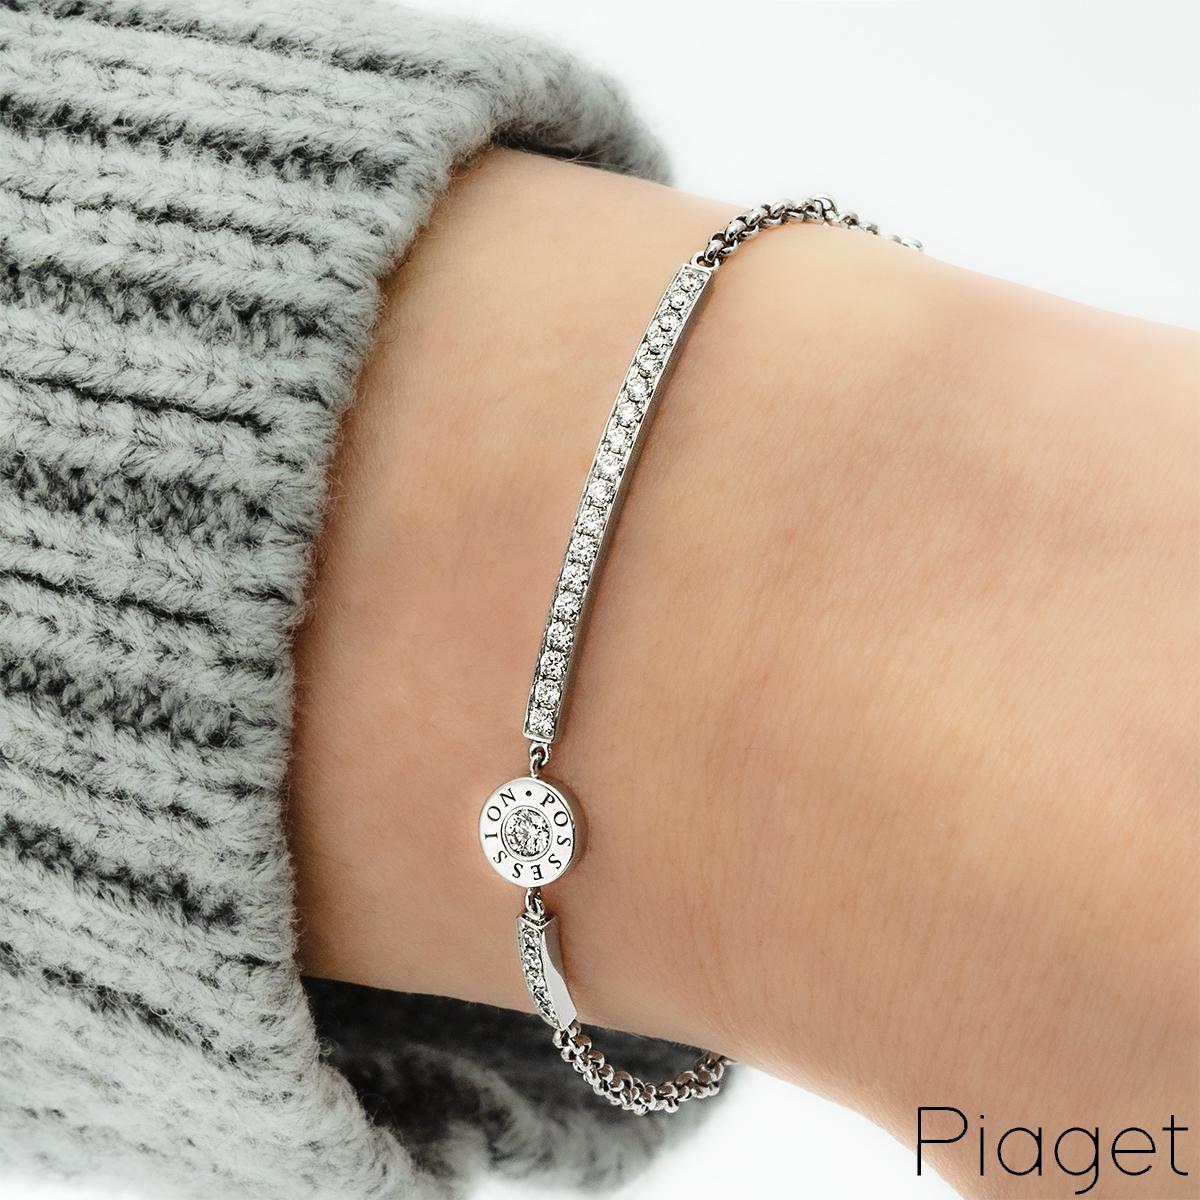 Women's Piaget White Gold Diamond Possession Bracelet